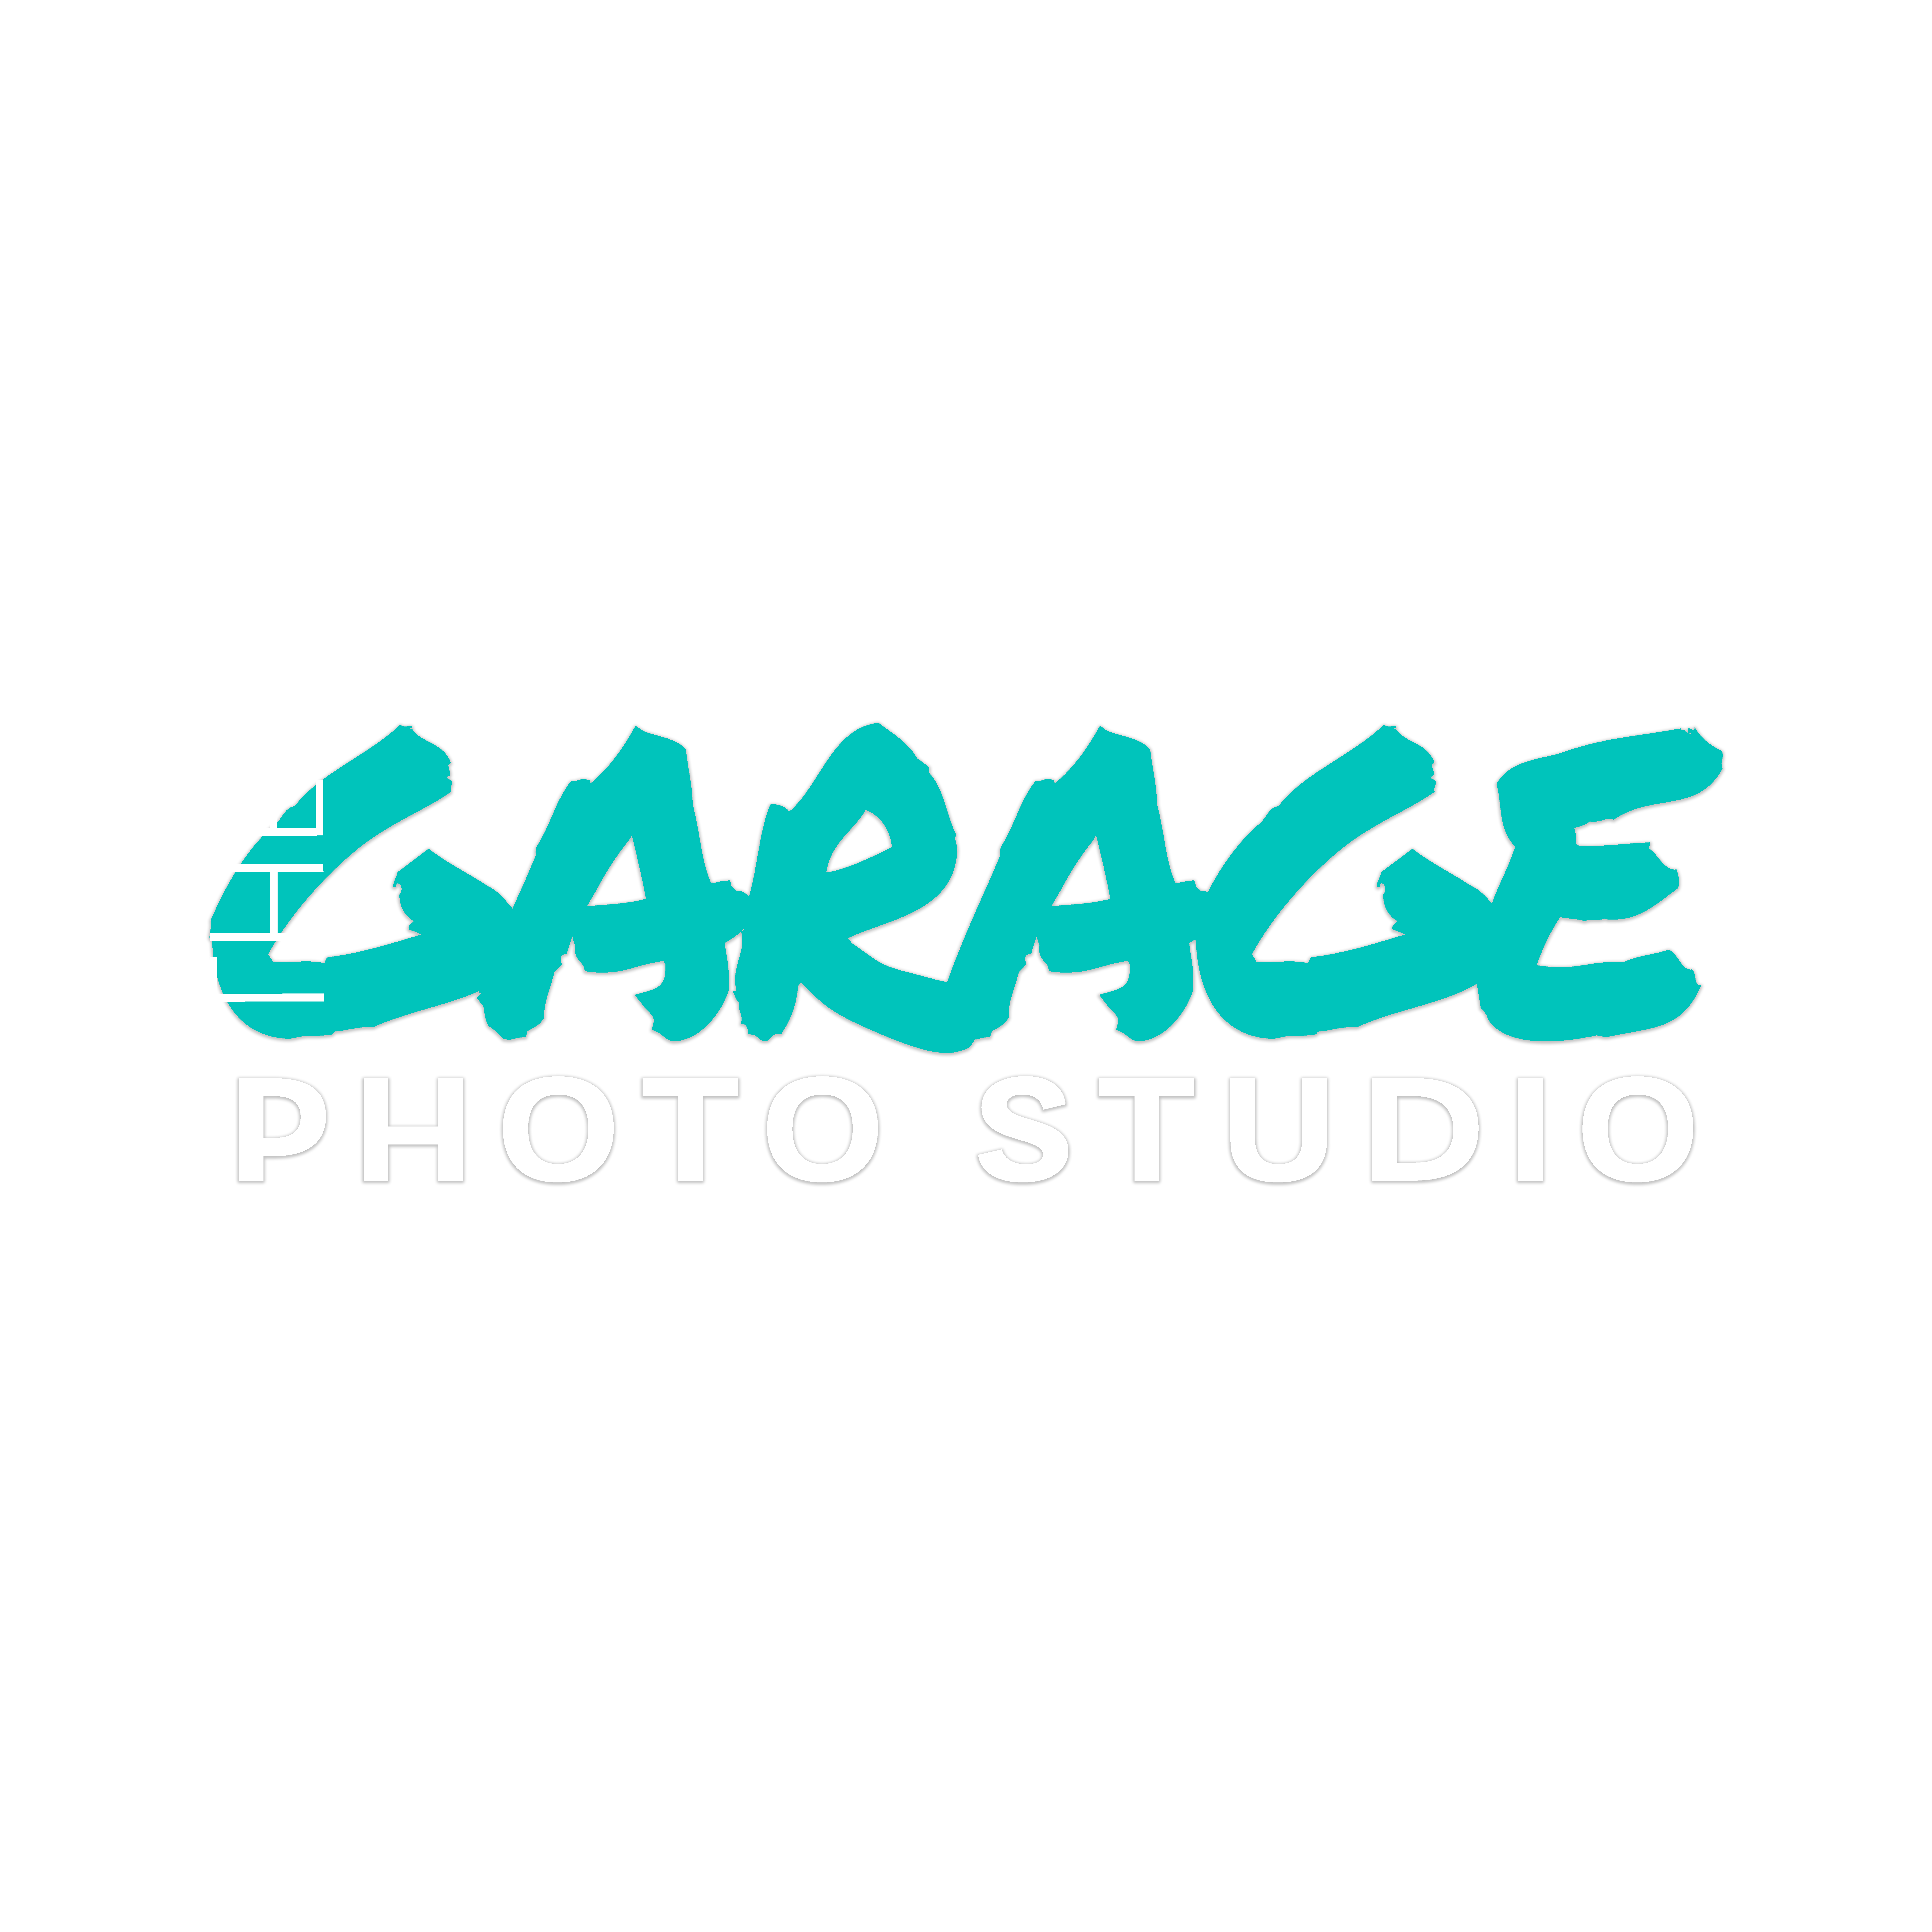 The Garage Photo Studio